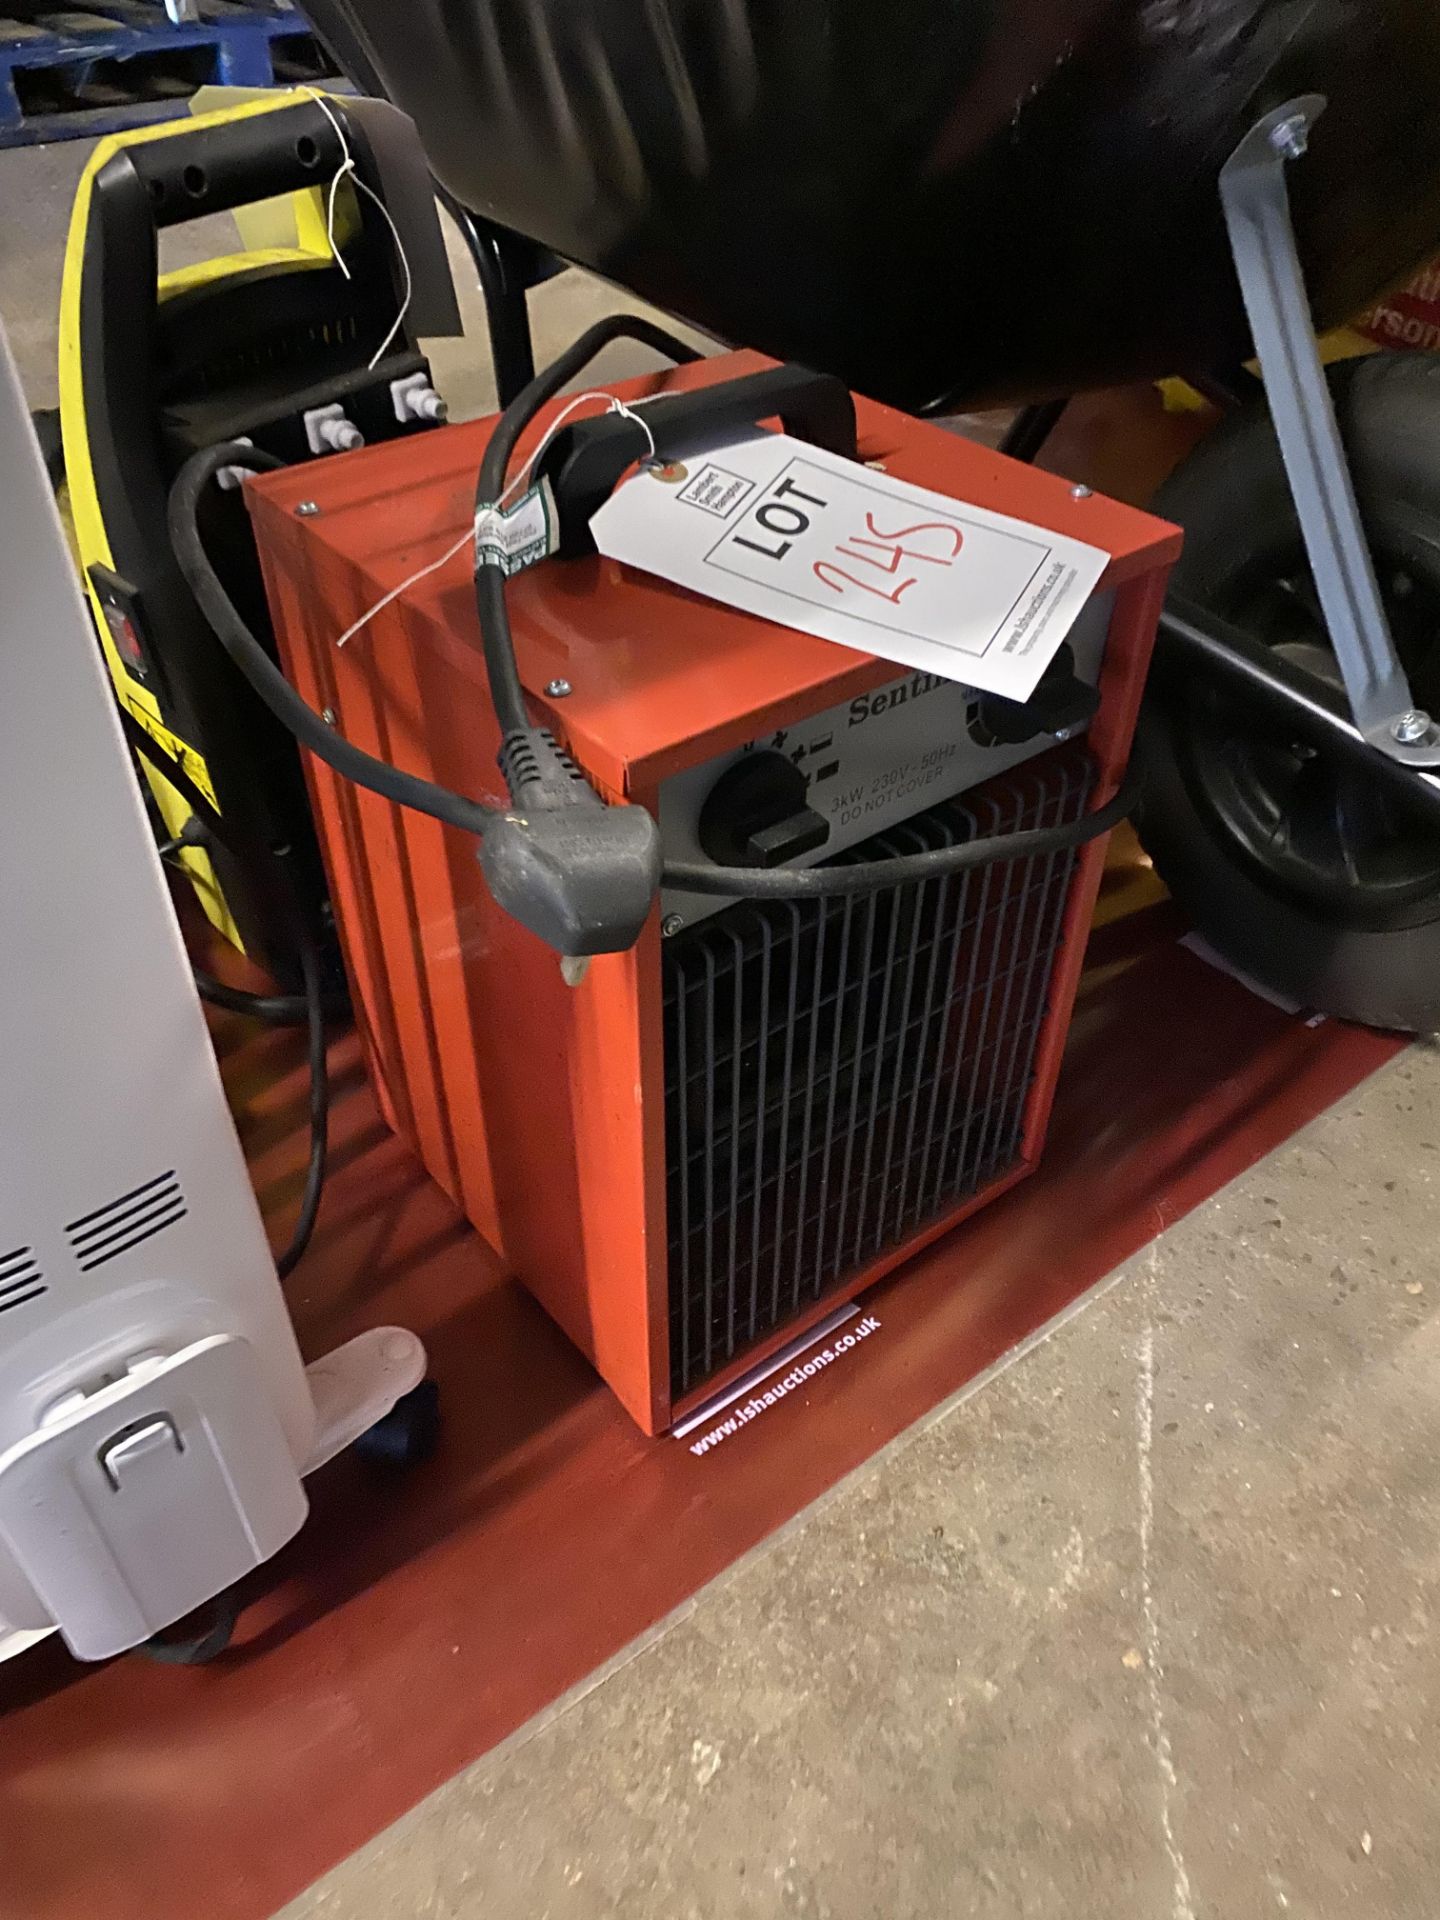 Sentik electric 3kw heater - Image 2 of 3